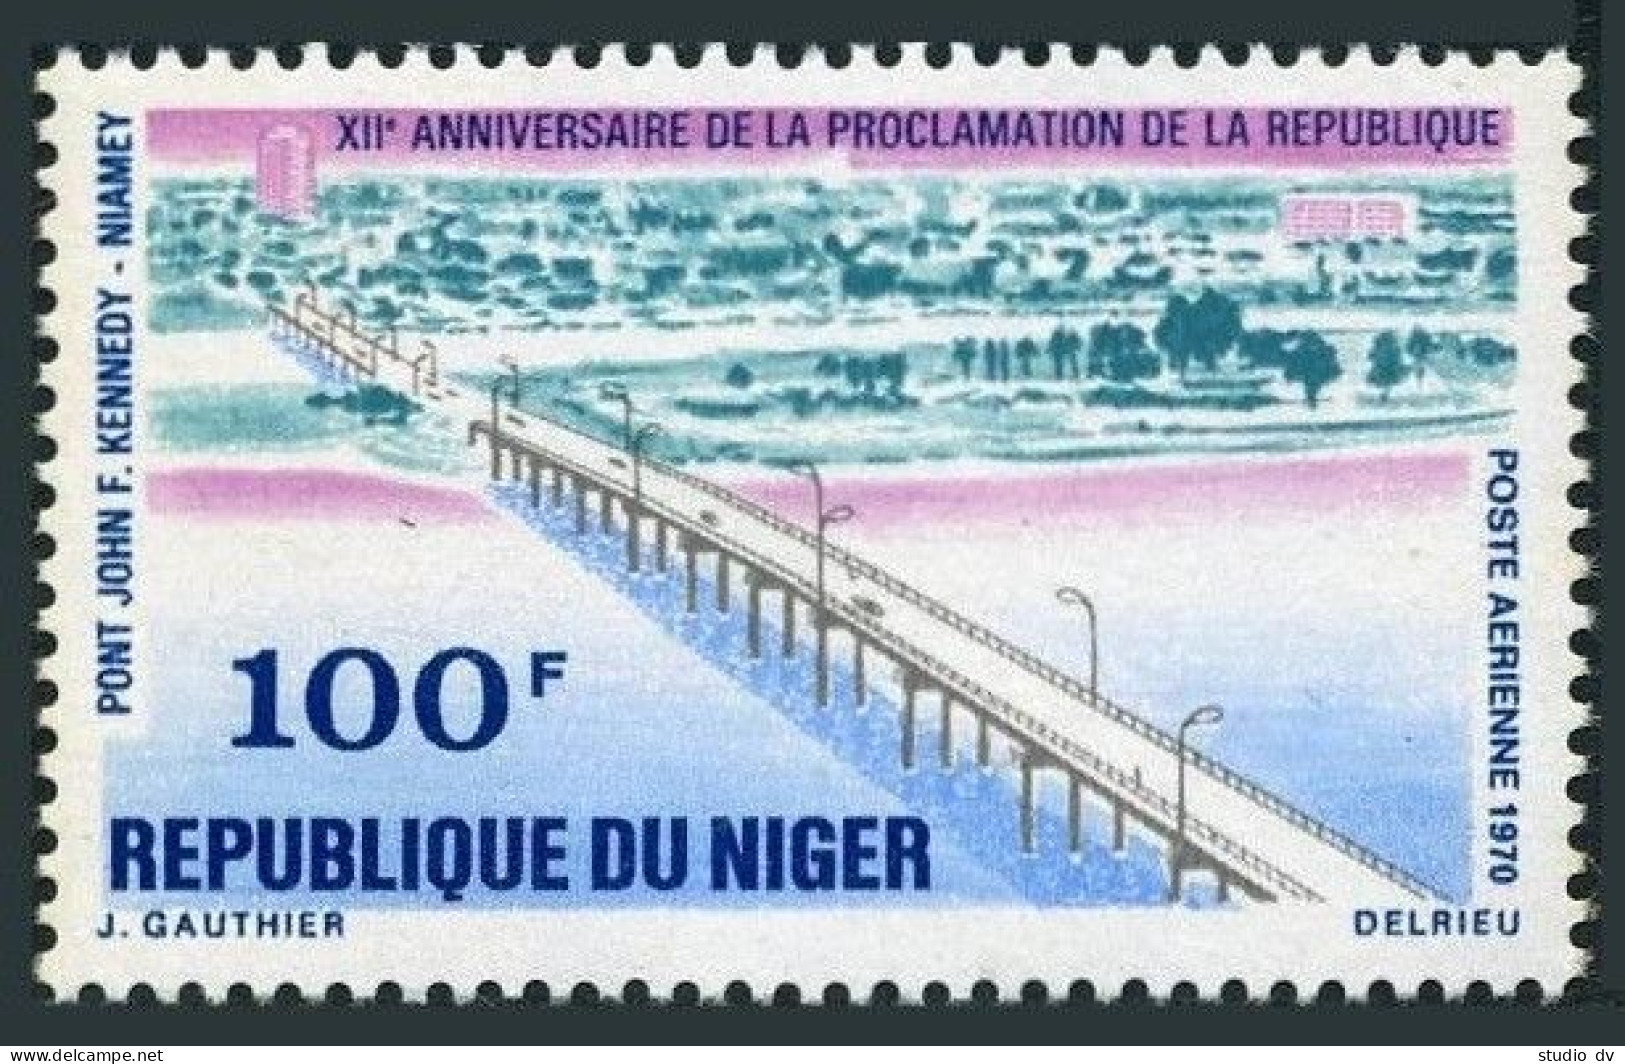 Niger C145,MNH.Michel 272. Independence 12th Ann.1970.John F.Kennedy Bridge. - Niger (1960-...)